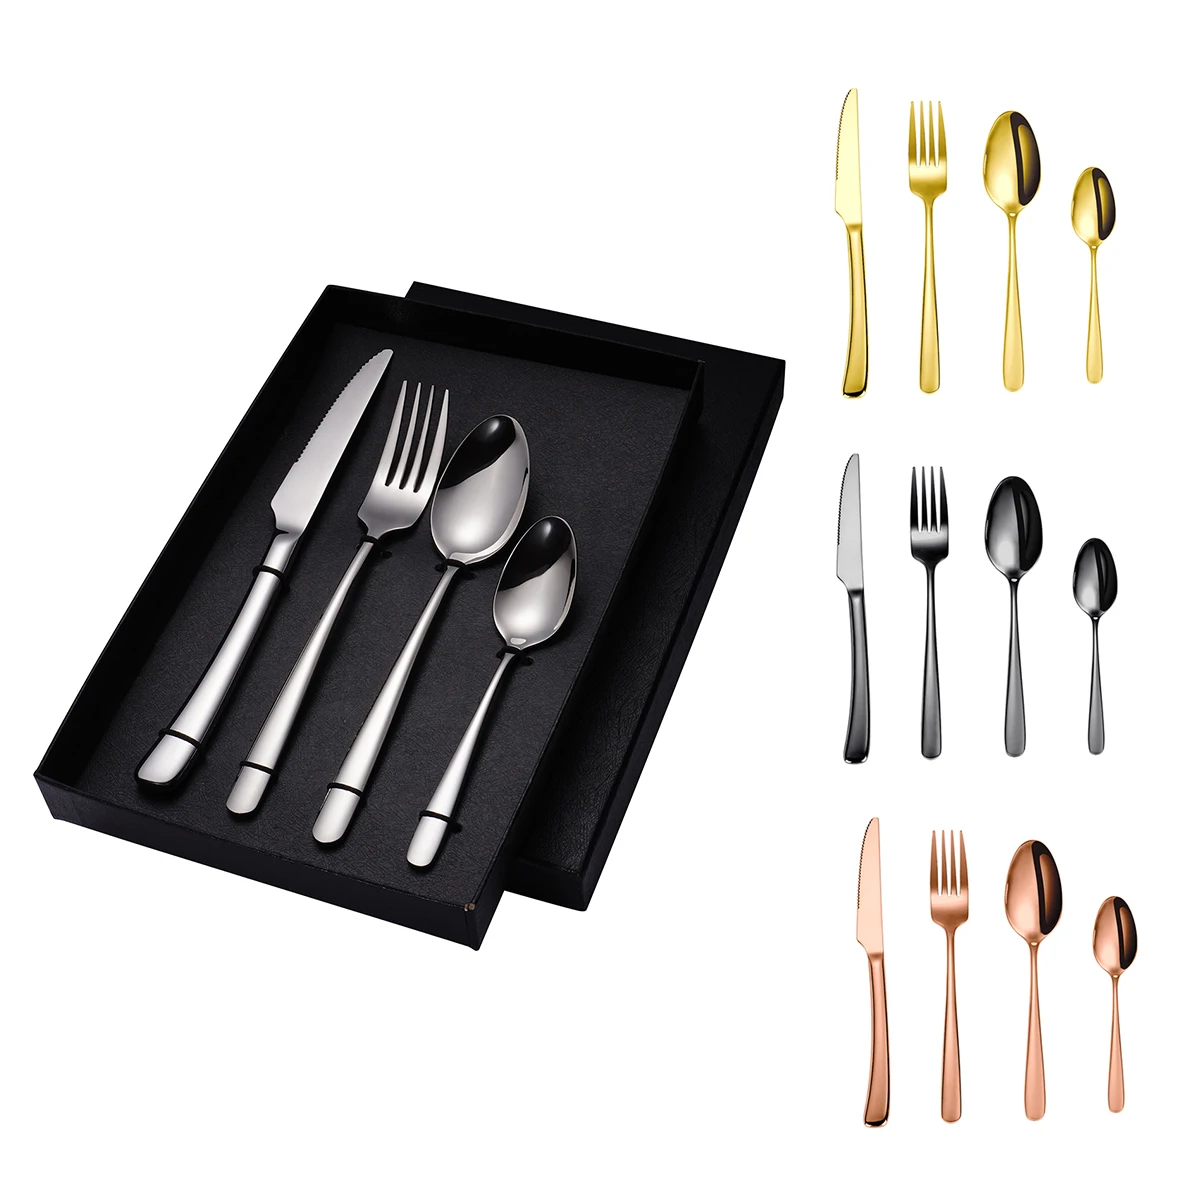 

Custom Hotel Restaurant Wedding Thick Forks Spoons Knives Silverware Gold Flatware 18/8 Stainless Steel Cutlery Set, Black,gold,sliver,rose glod,colorful